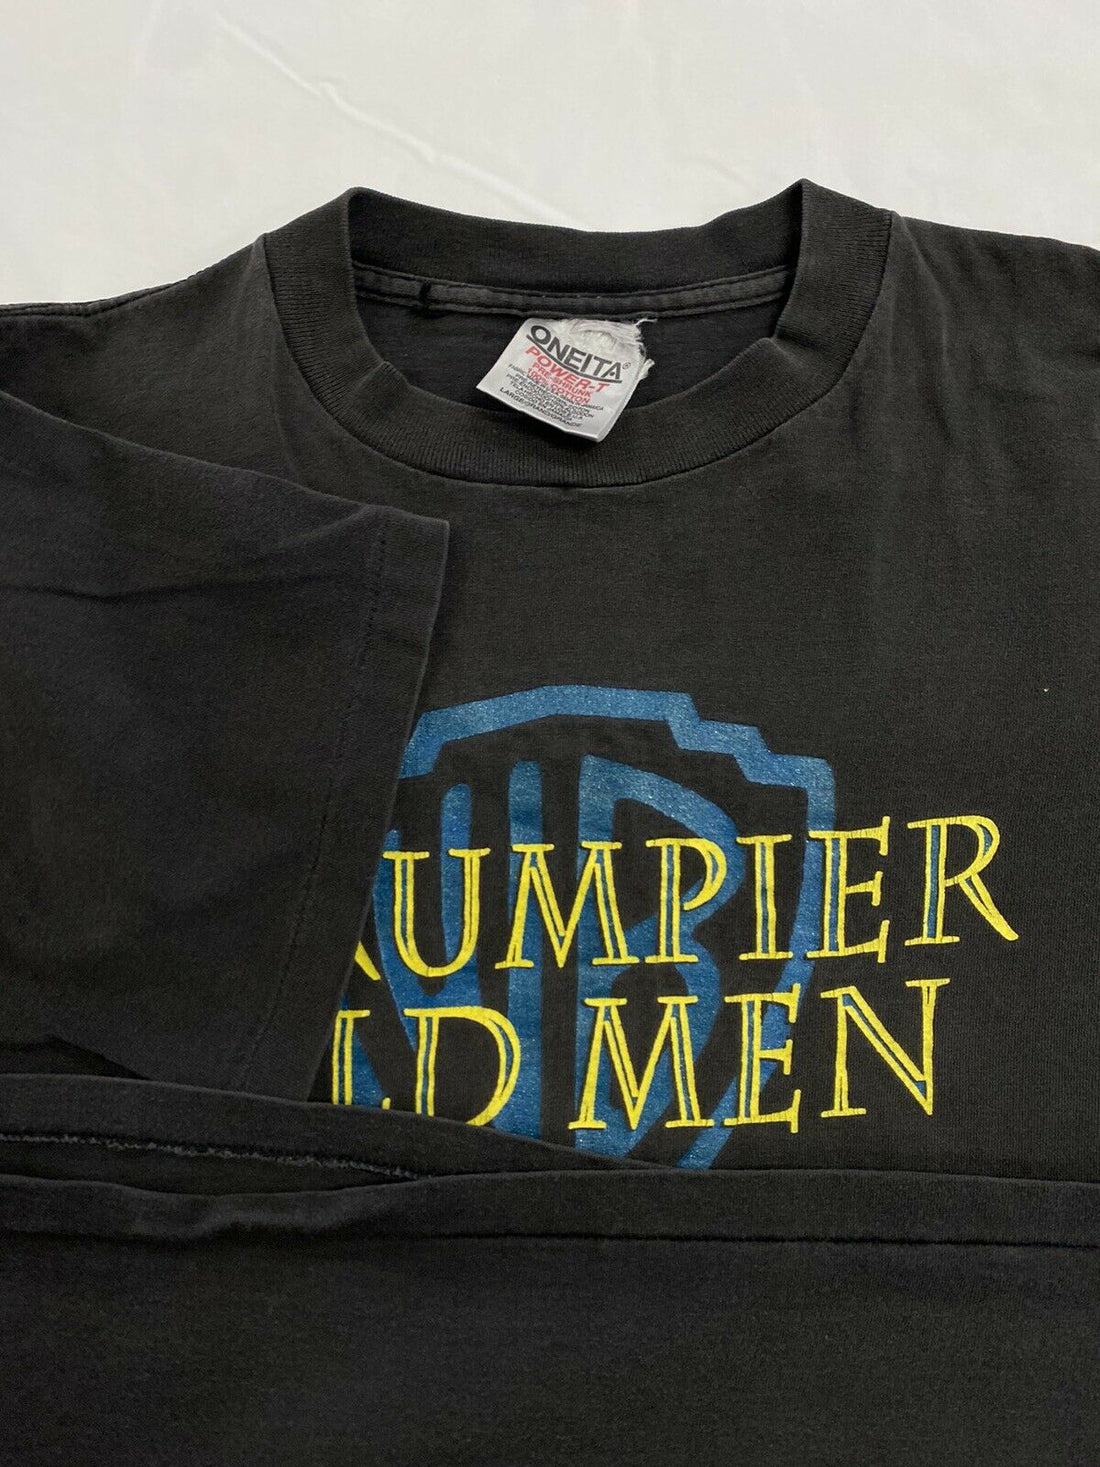 Vintage Grumpier Old Men T-Shirt Size Large 90s Warner Bros Movie Promo